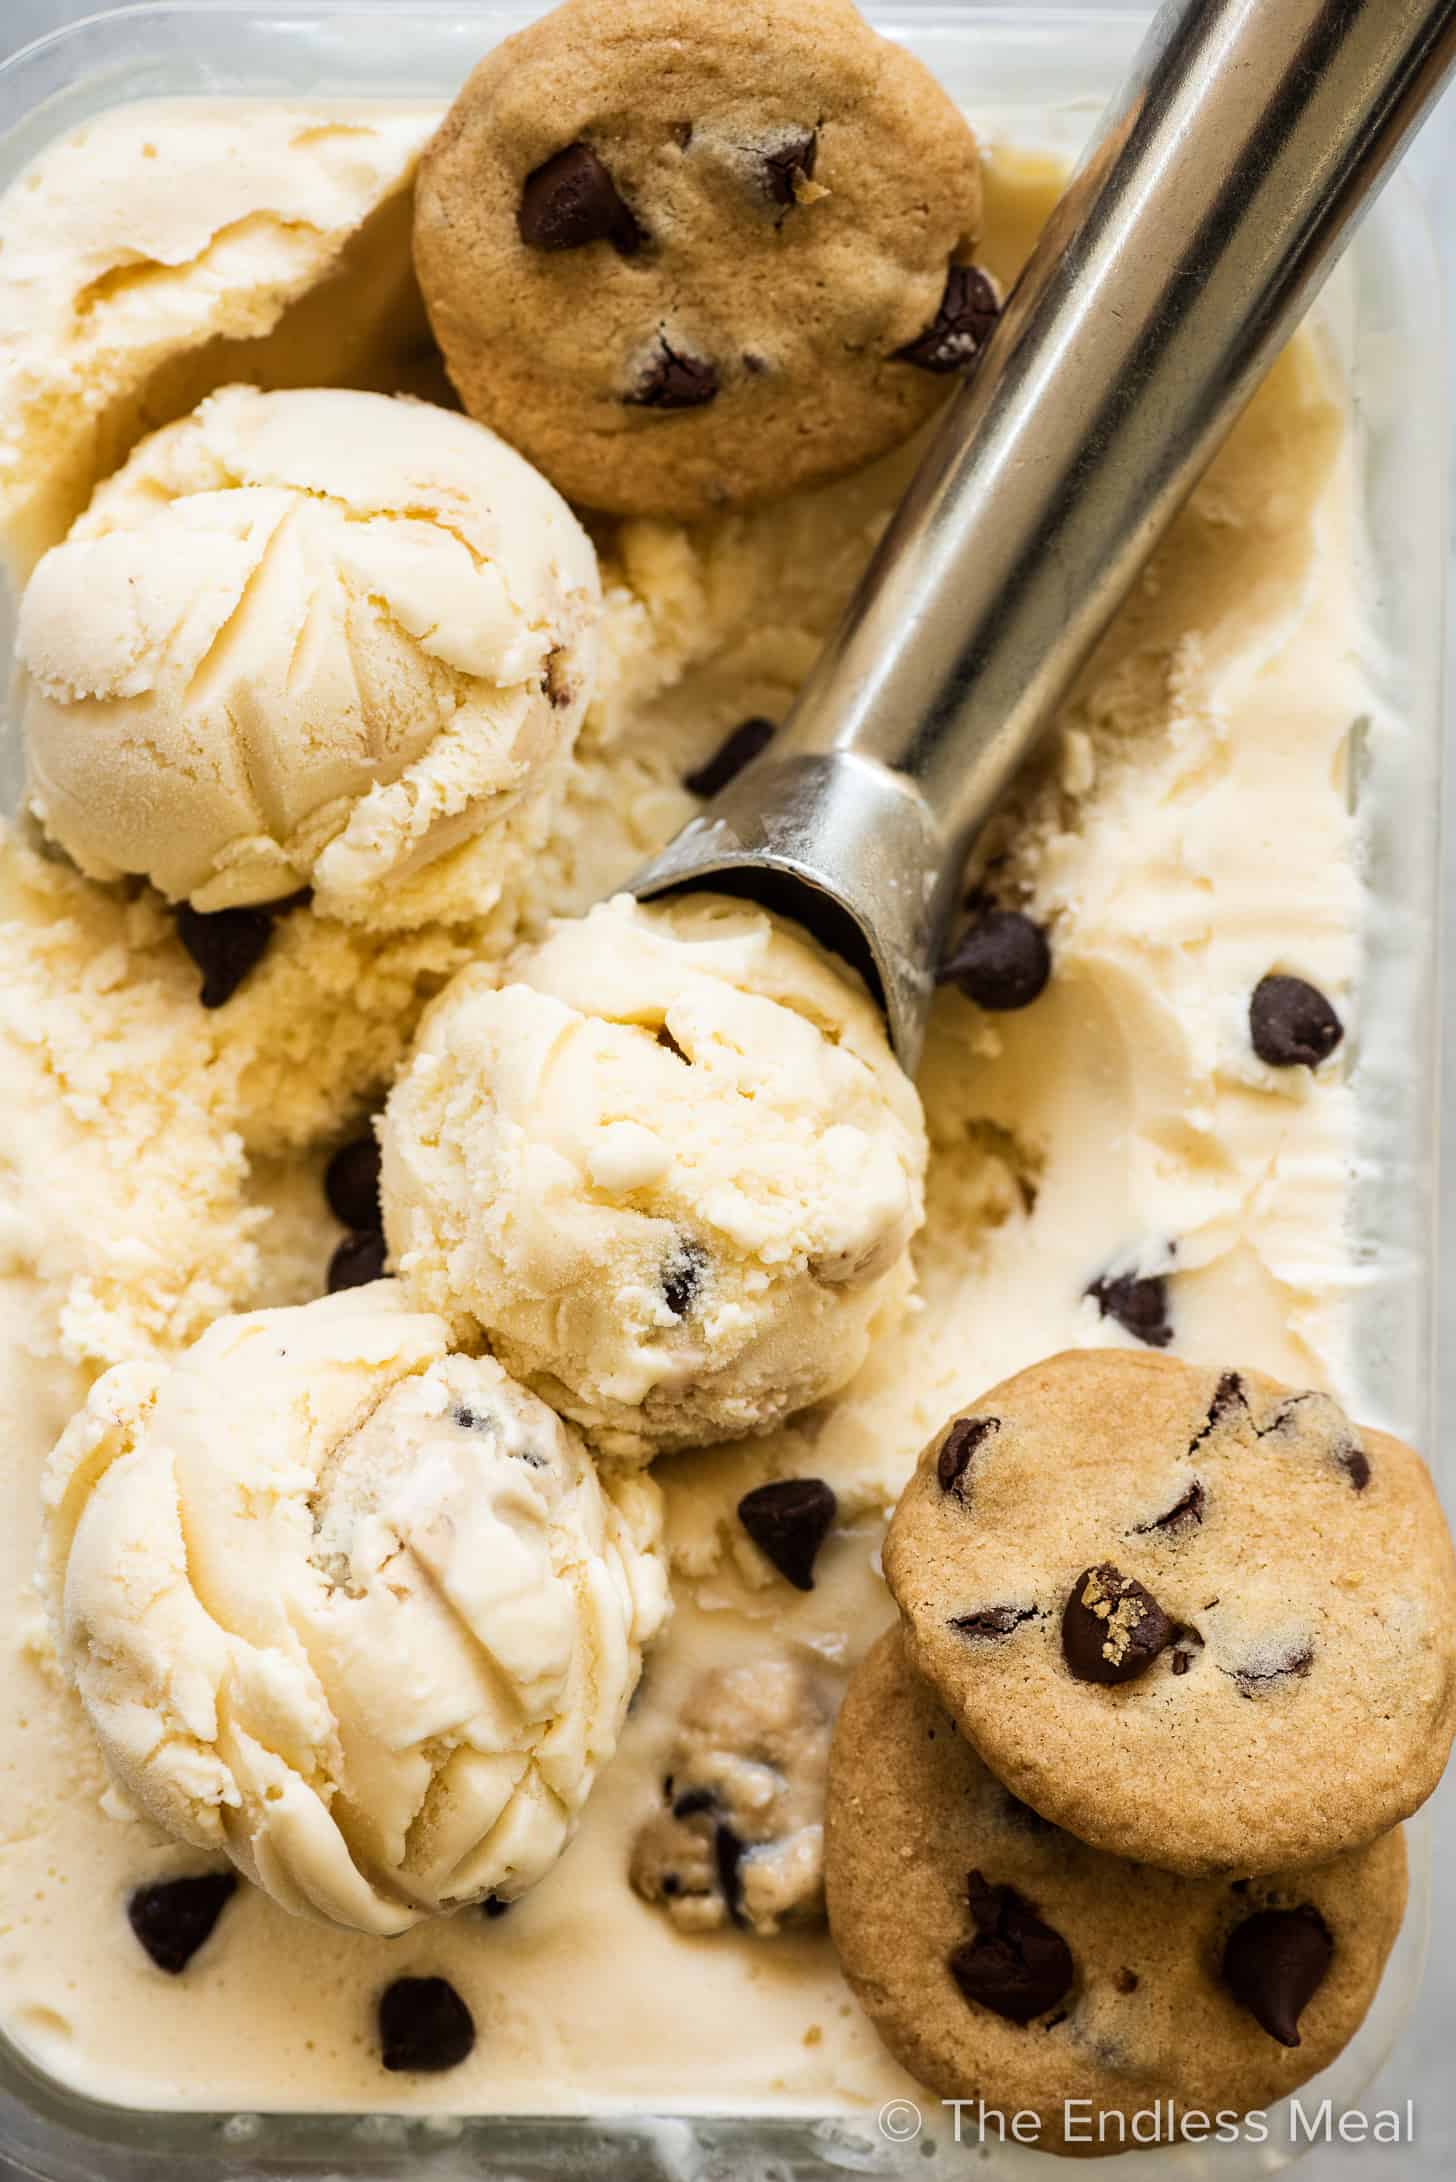 https://www.theendlessmeal.com/wp-content/uploads/2021/08/Chocolate-Chip-Cookie-Dough-Ice-Cream-3.jpg